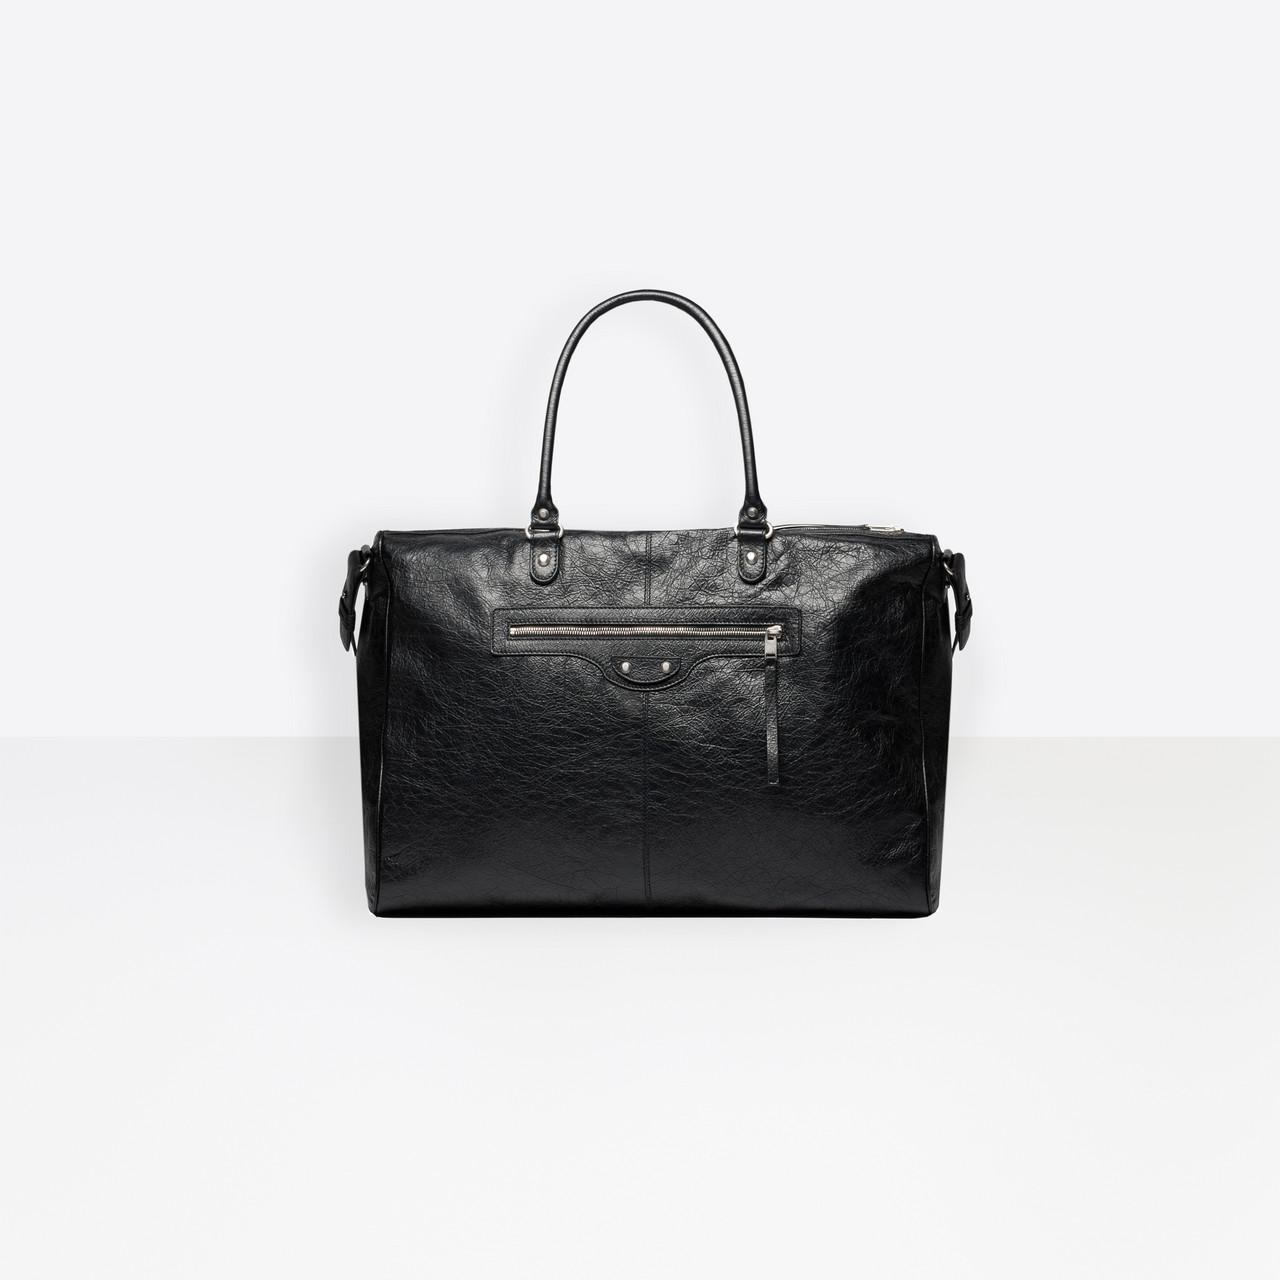 Balenciaga Leather Classic Weekender Strap in Black - Lyst